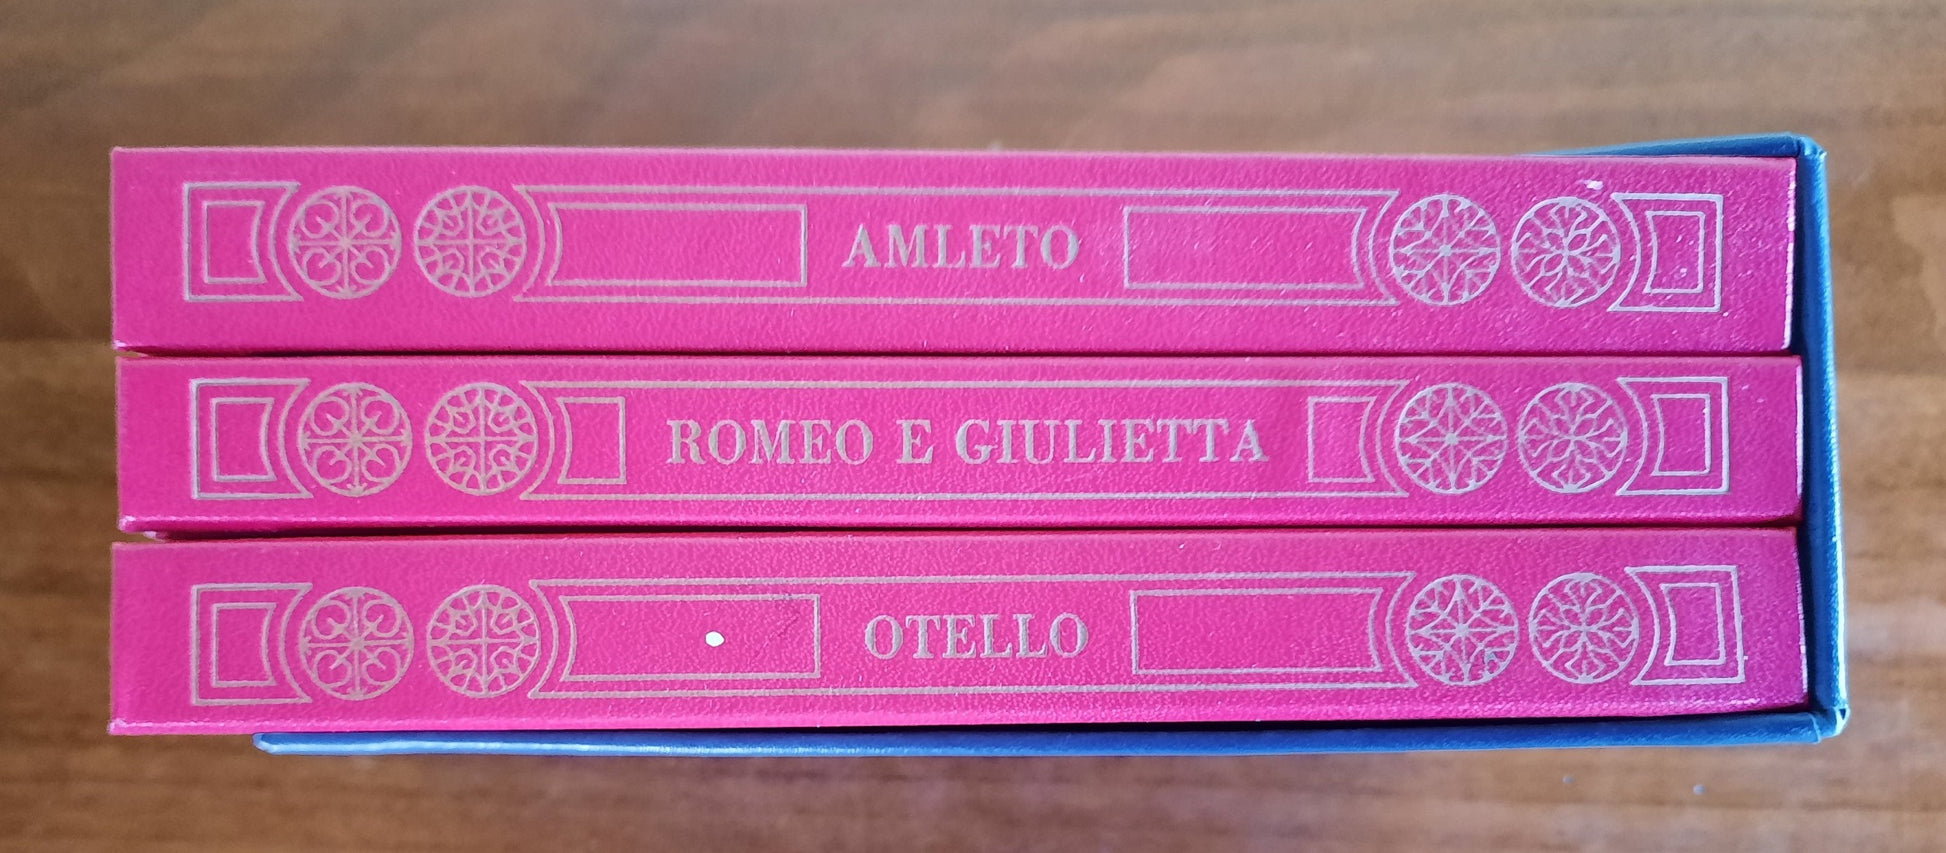 Shakespeare - Romeo e Giulietta - Amleto - Otello - Cofanetto Mondadori